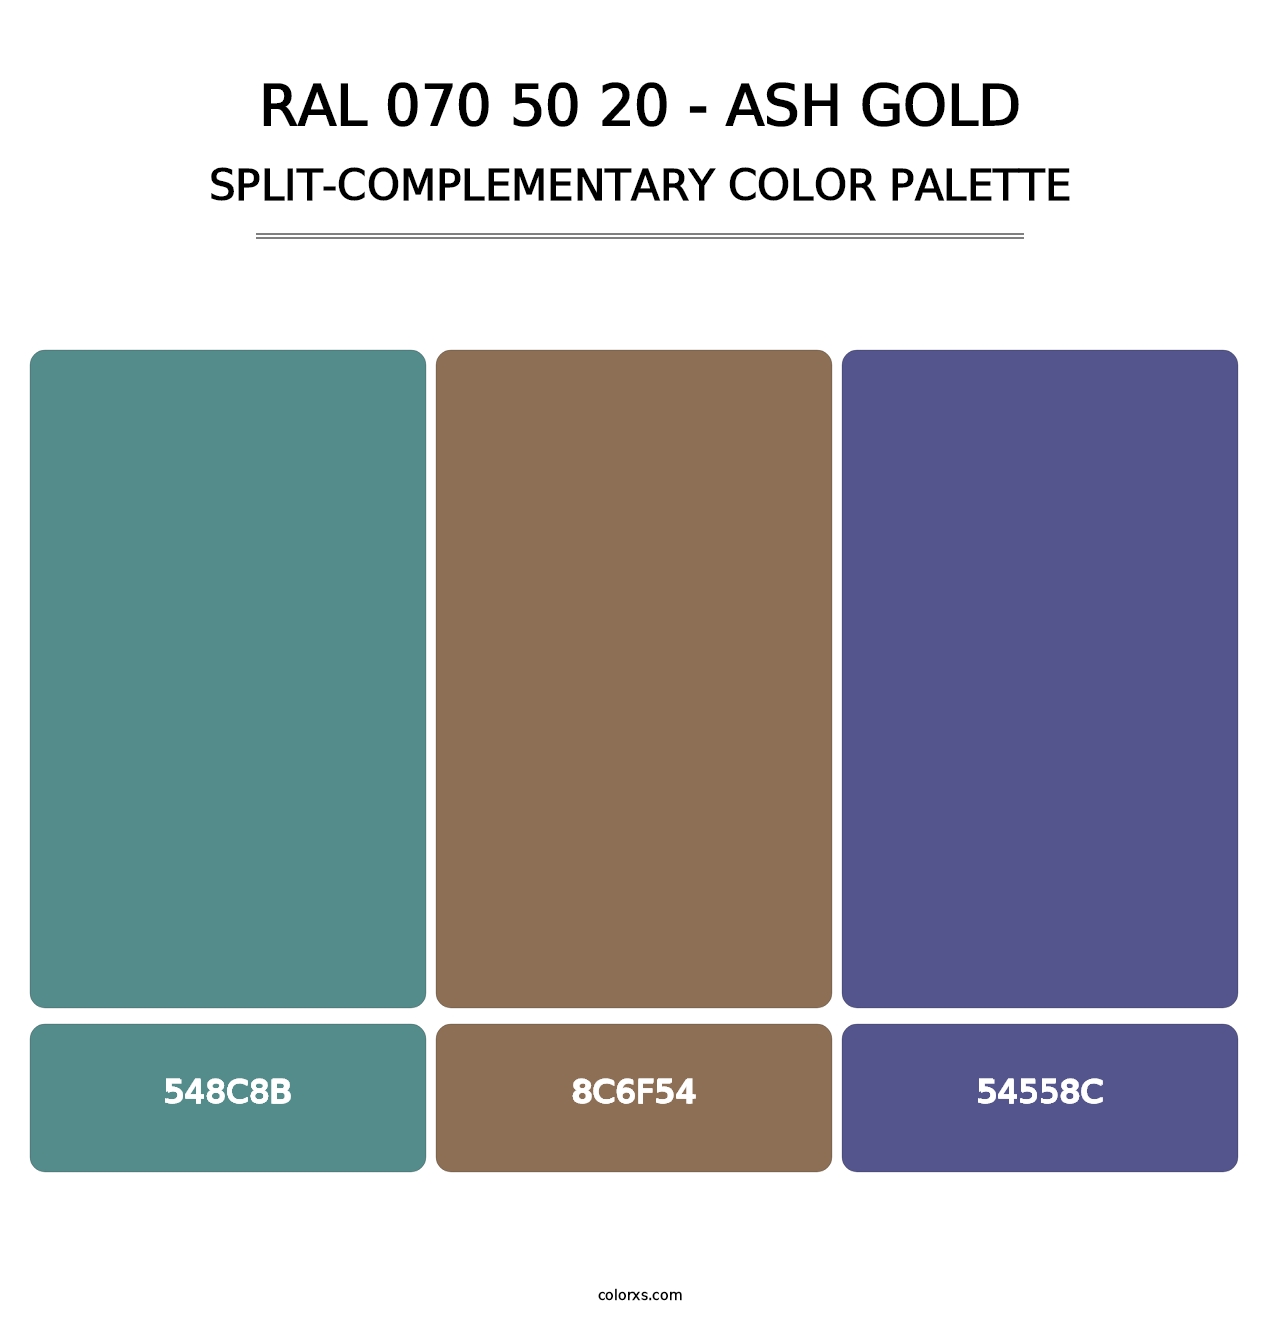 RAL 070 50 20 - Ash Gold - Split-Complementary Color Palette